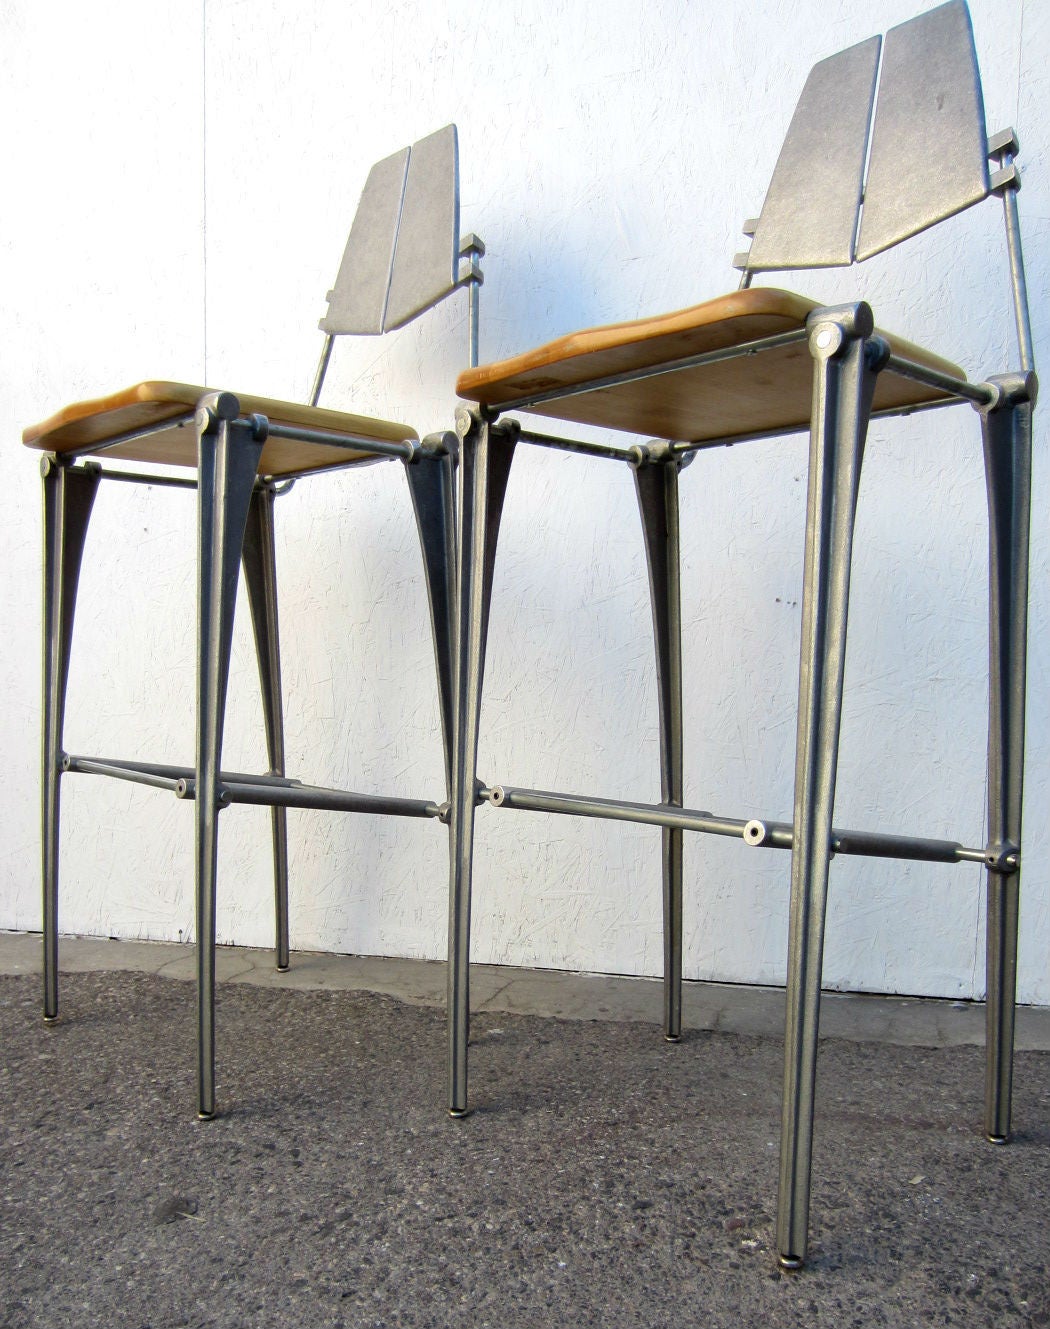 Outstanding aluminium bar stools designed by Robert Josten.
Cast aluminium with beechwood seats.
Industrial meets modernism, circa 1980s.